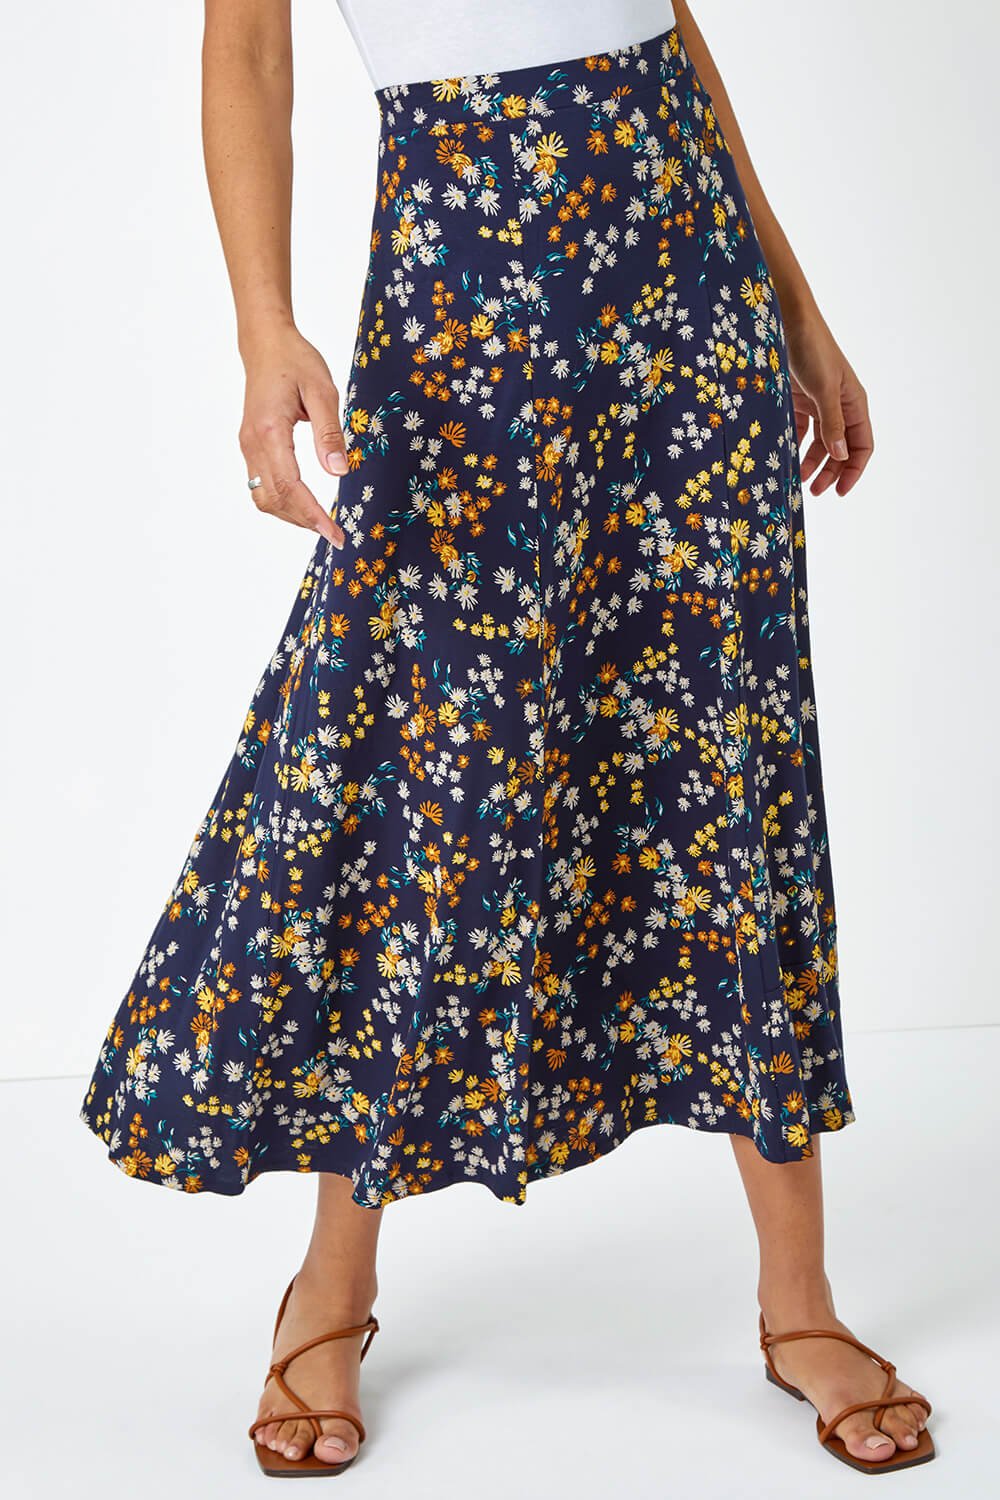 Ditsy Floral Print Midi Skirt in Navy - Roman Originals UK